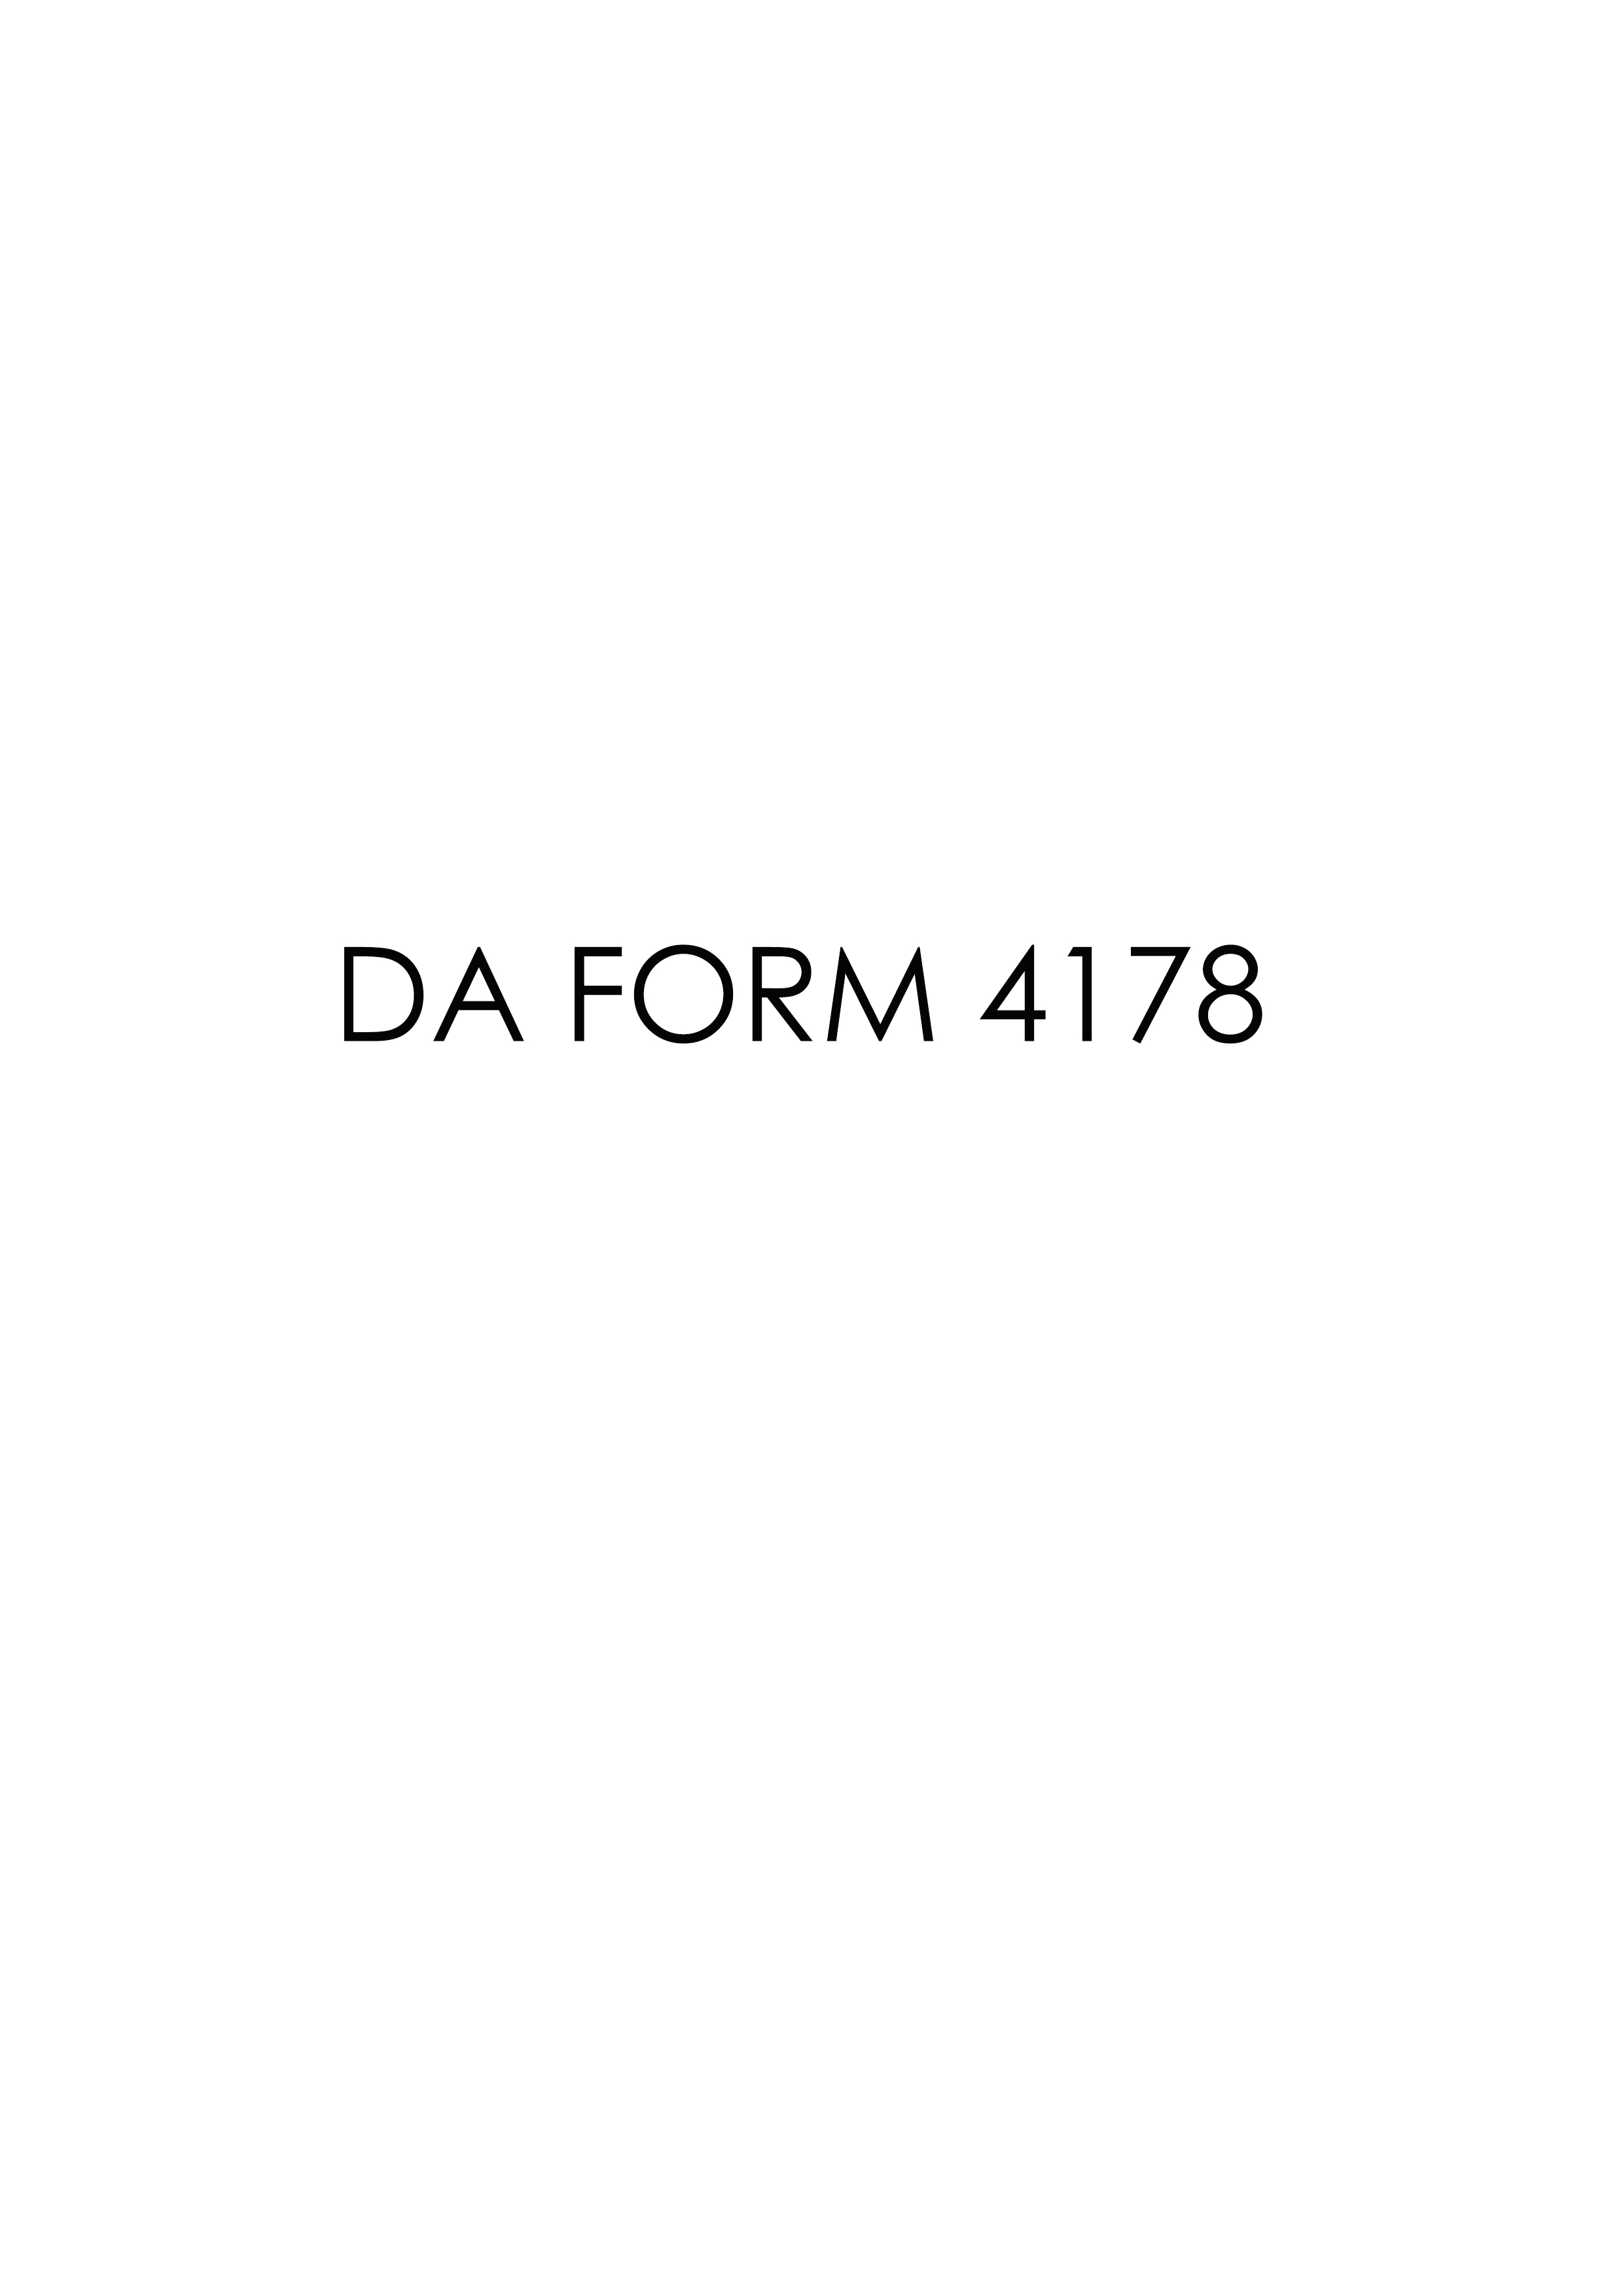 da Form 4178 fillable